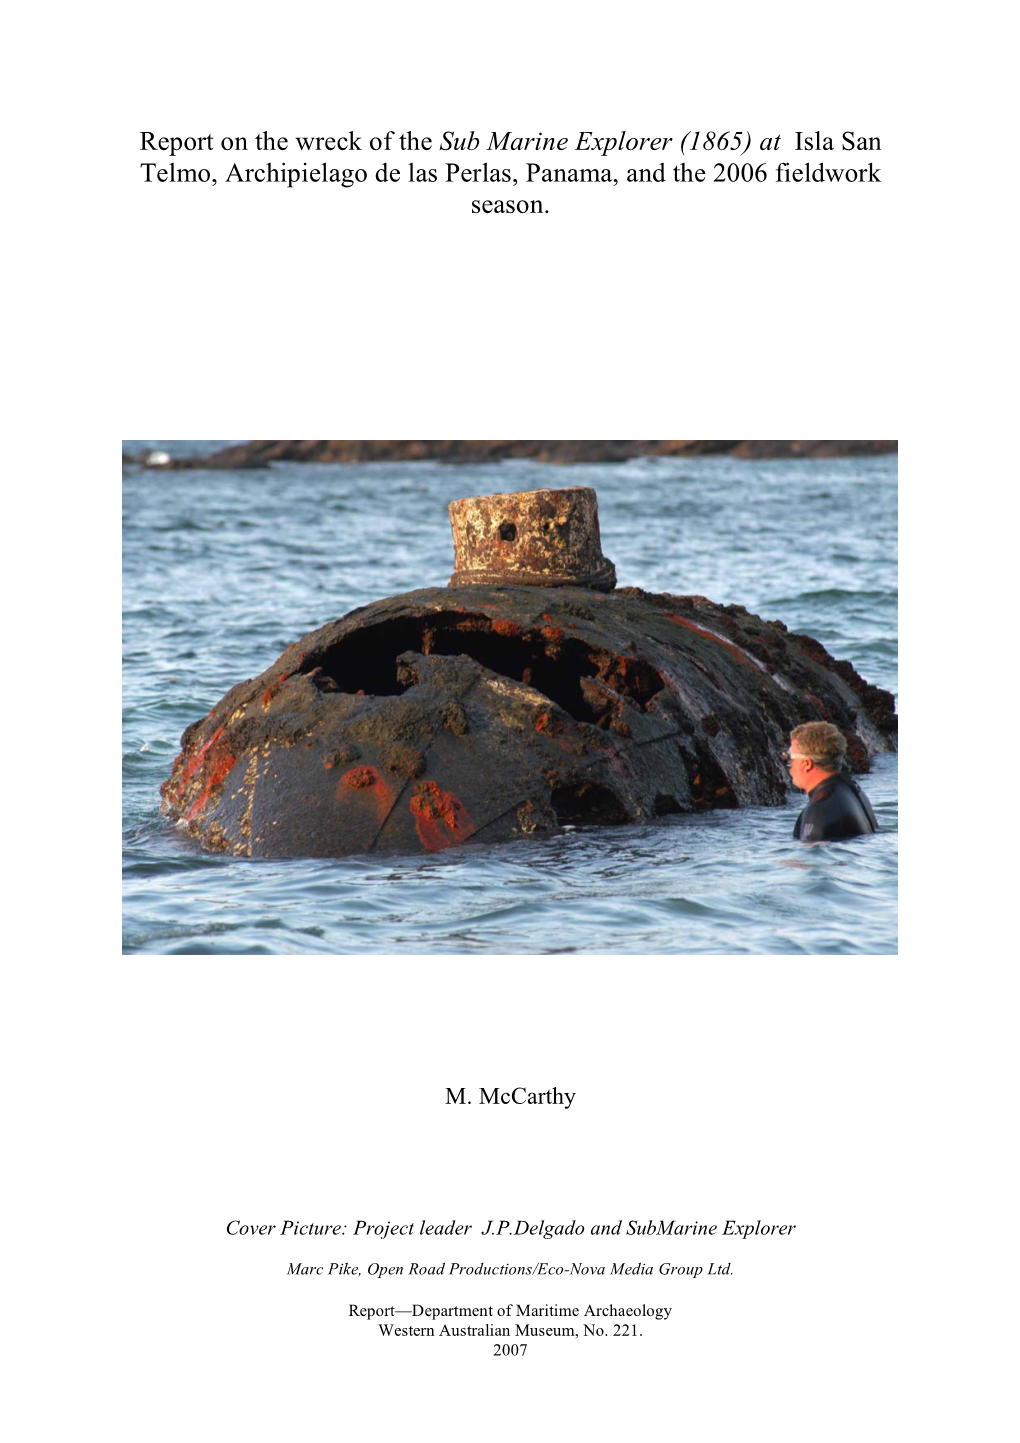 Report on the Wreck of the Sub Marine Explorer (1865) at Isla San Telmo, Archipielago De Las Perlas, Panama, and the 2006 Fieldwork Season